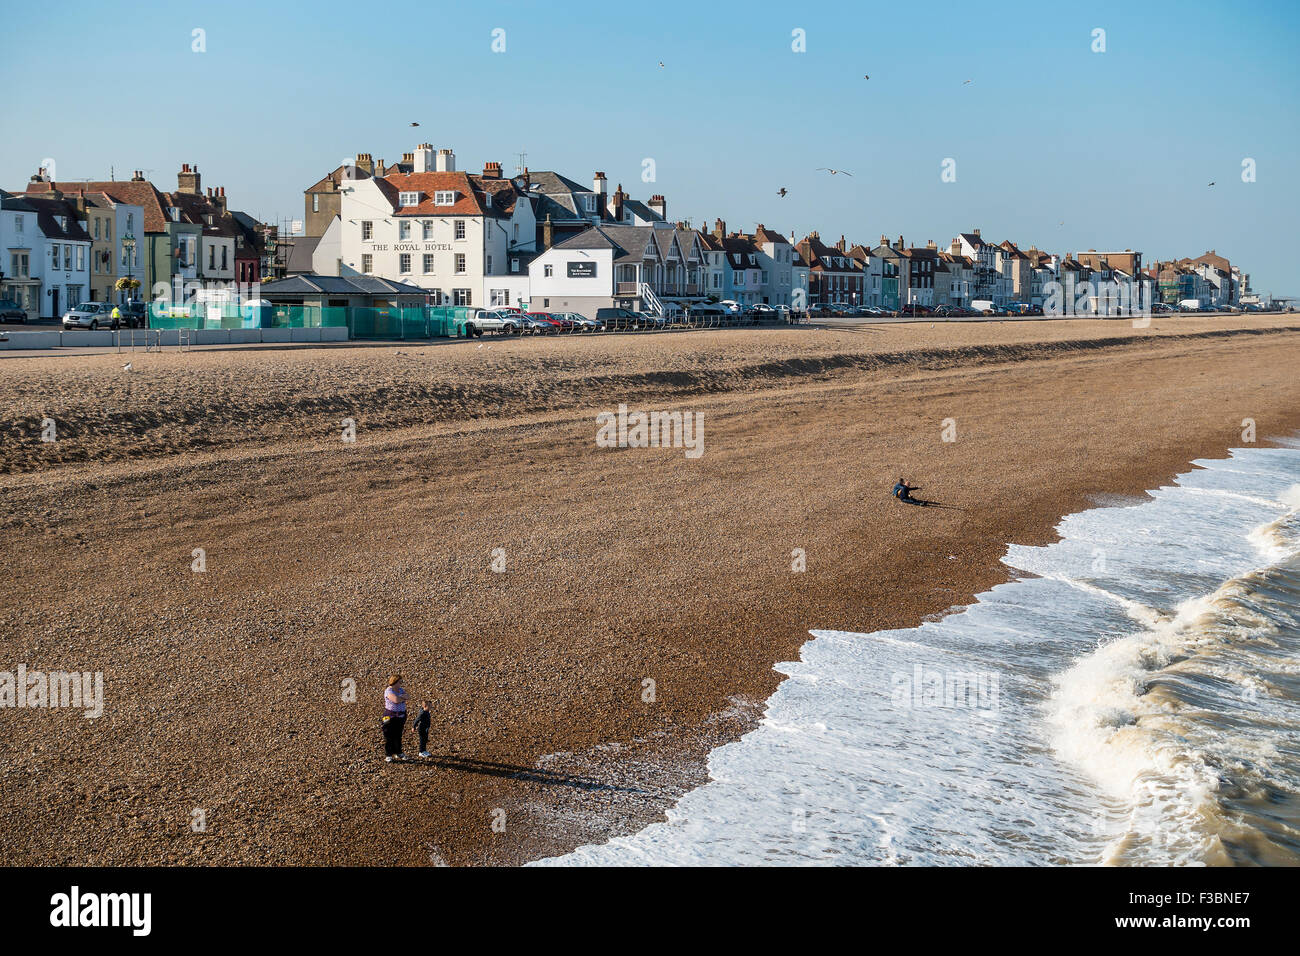 Viel Strand Meer Eigenschaften das Royal Hotel Meer Kiesstrand Absturz Stockfoto